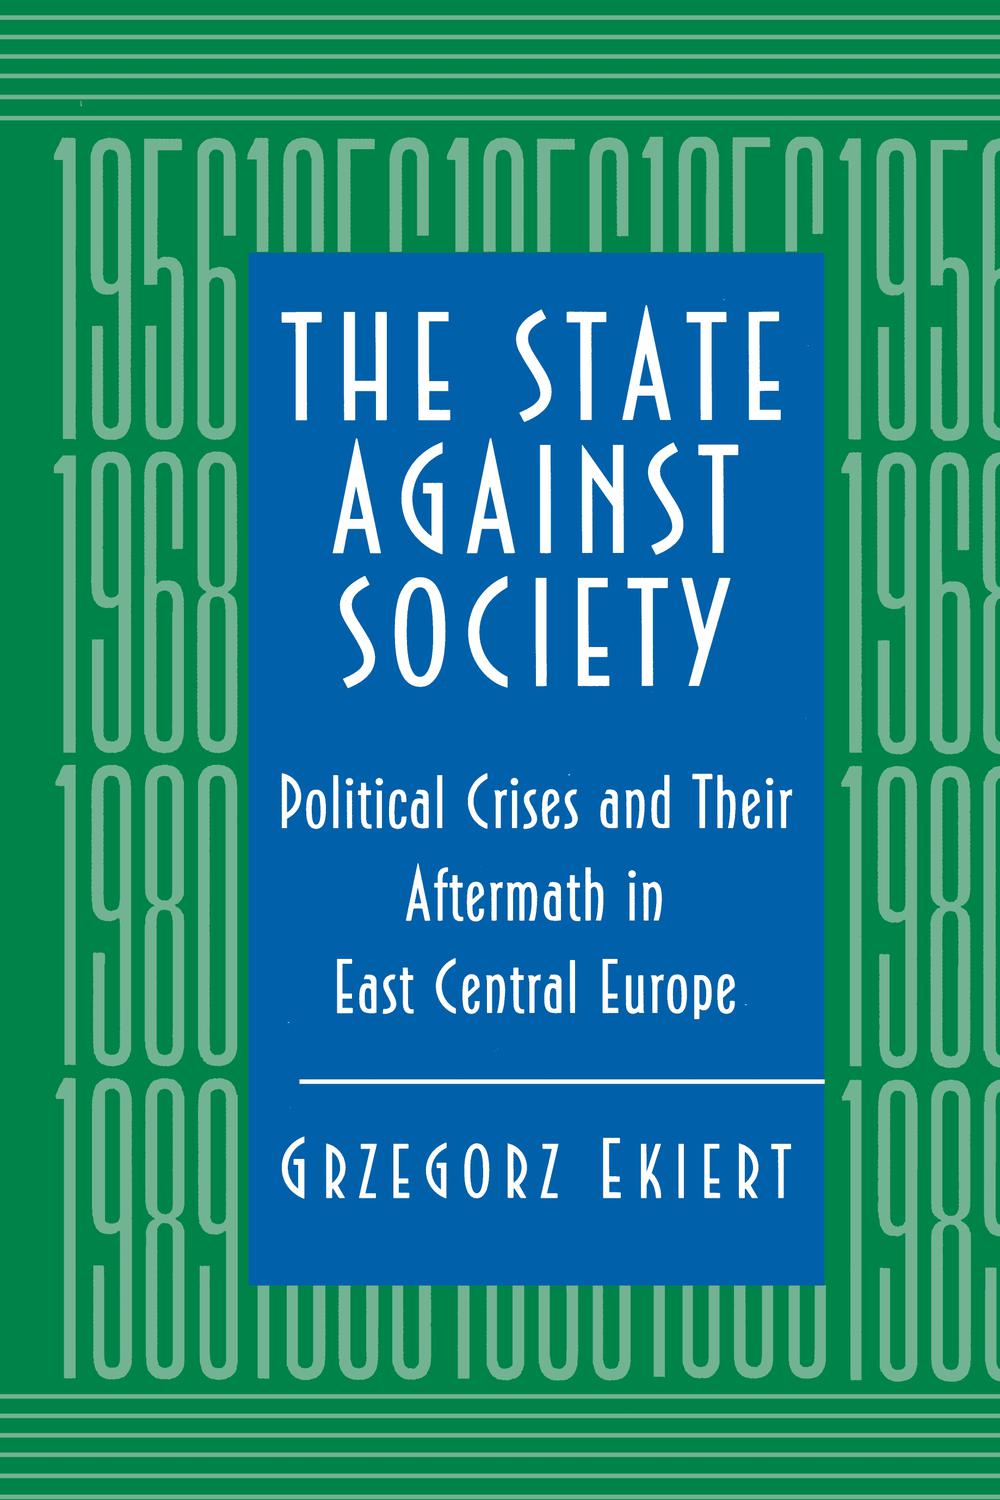 The State against Society - Grzegorz Ekiert